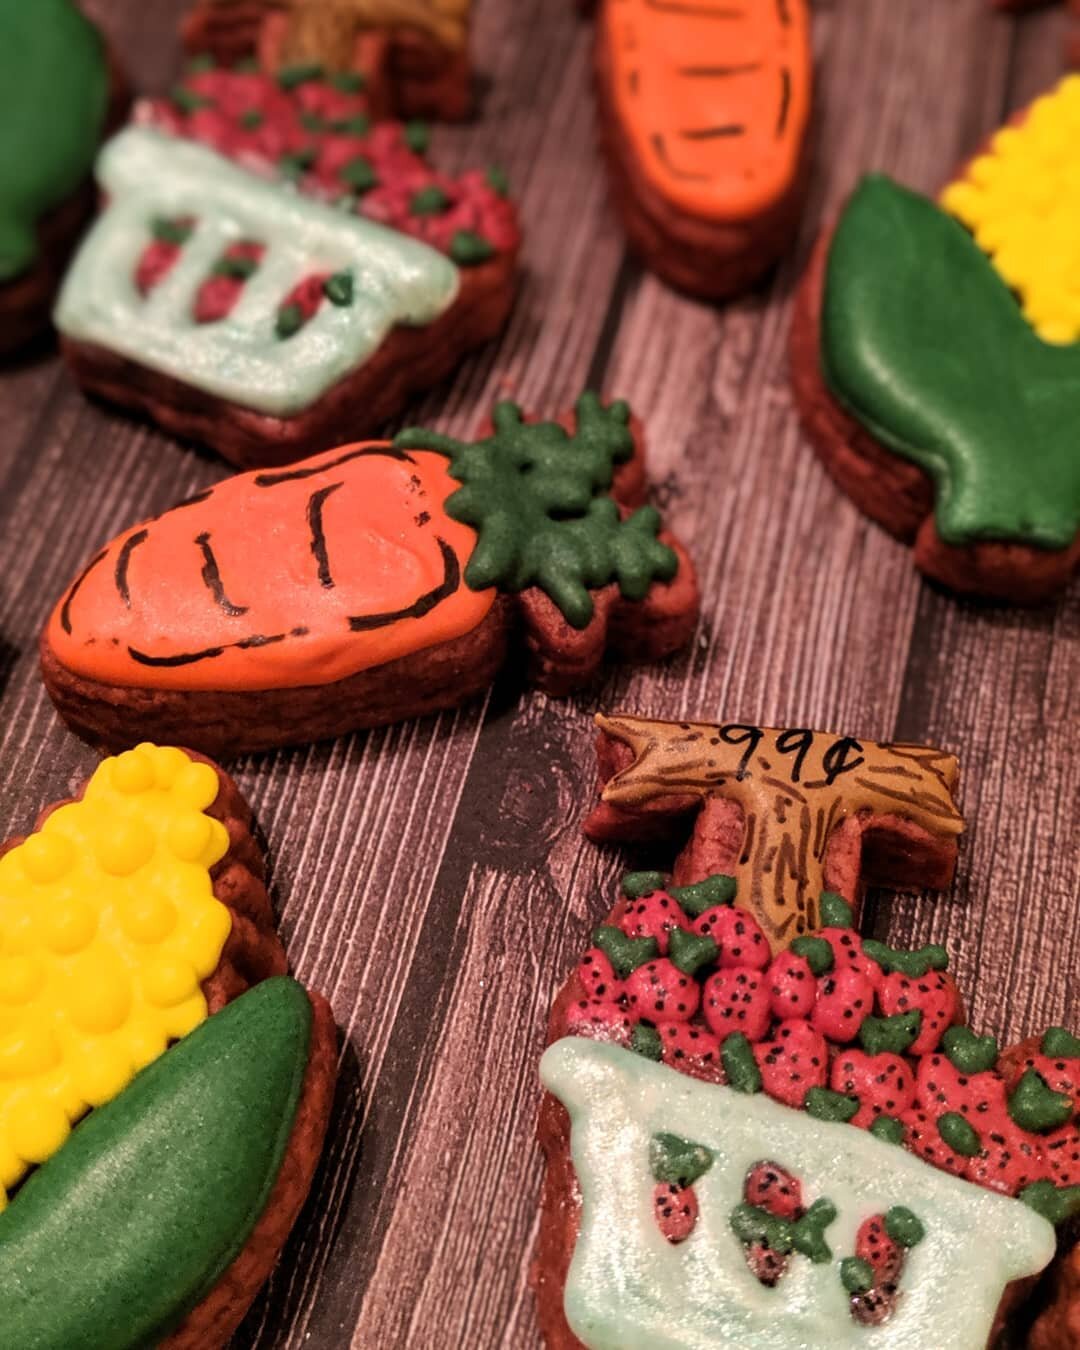 The mini farmer's market cookies :) Pen for scale 😂

#minicookies #minisugarcookies #cookiedecorating #sugarcookiesofinstagram #cookiesofinstagram